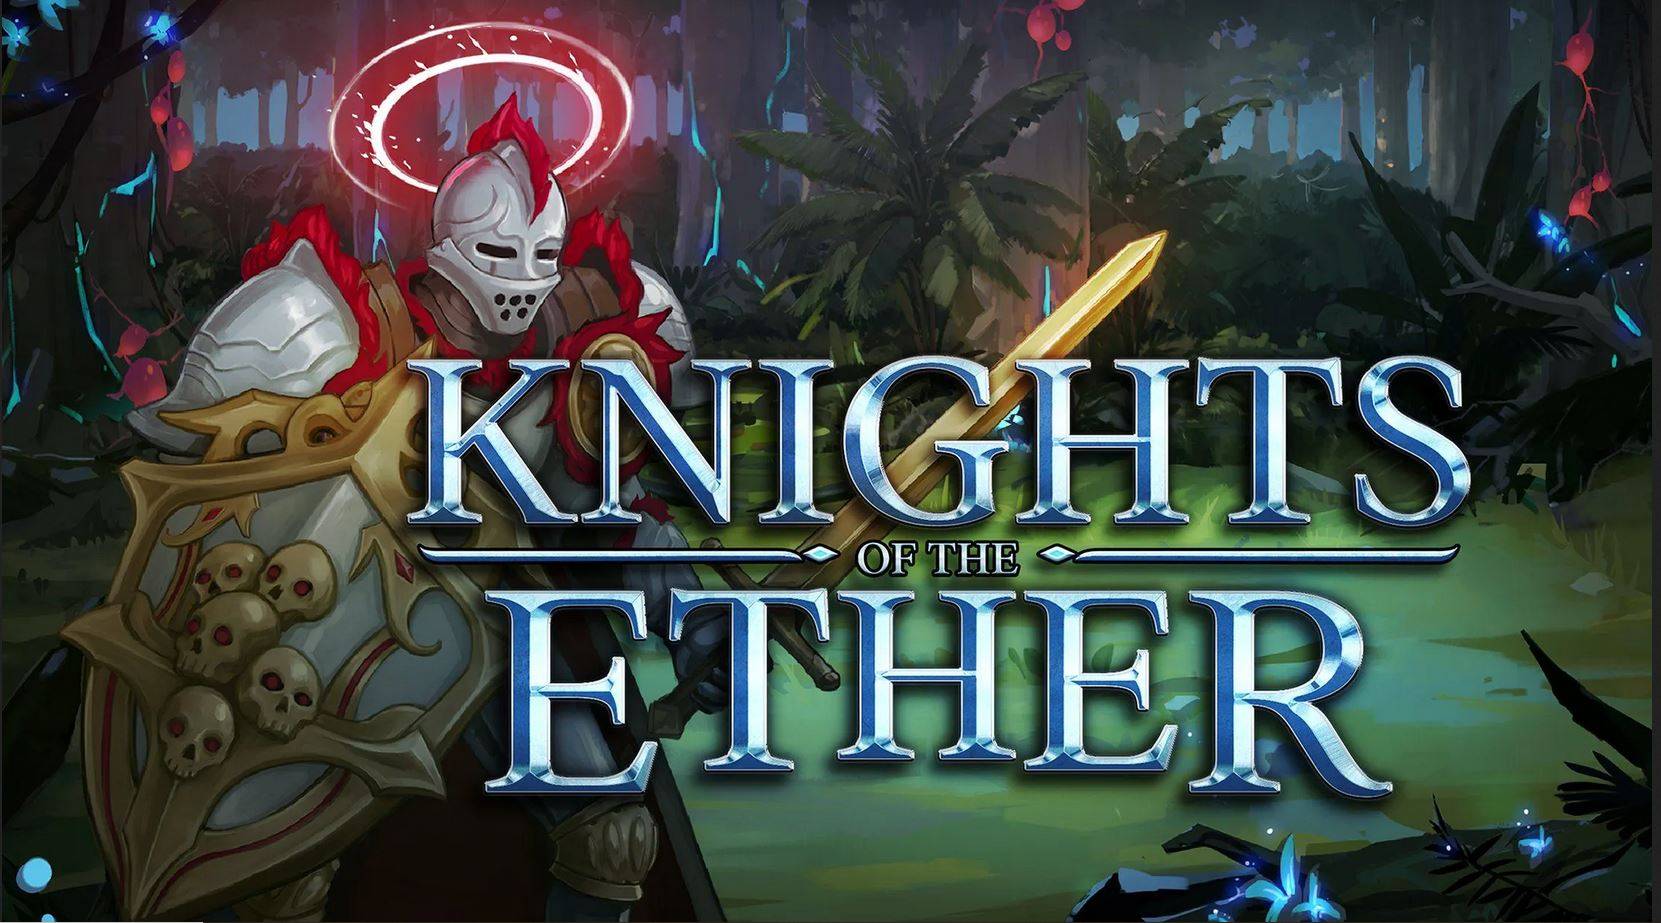 Ridders van de Ether: Blightfell - Web3 P2E Blockchain-spel